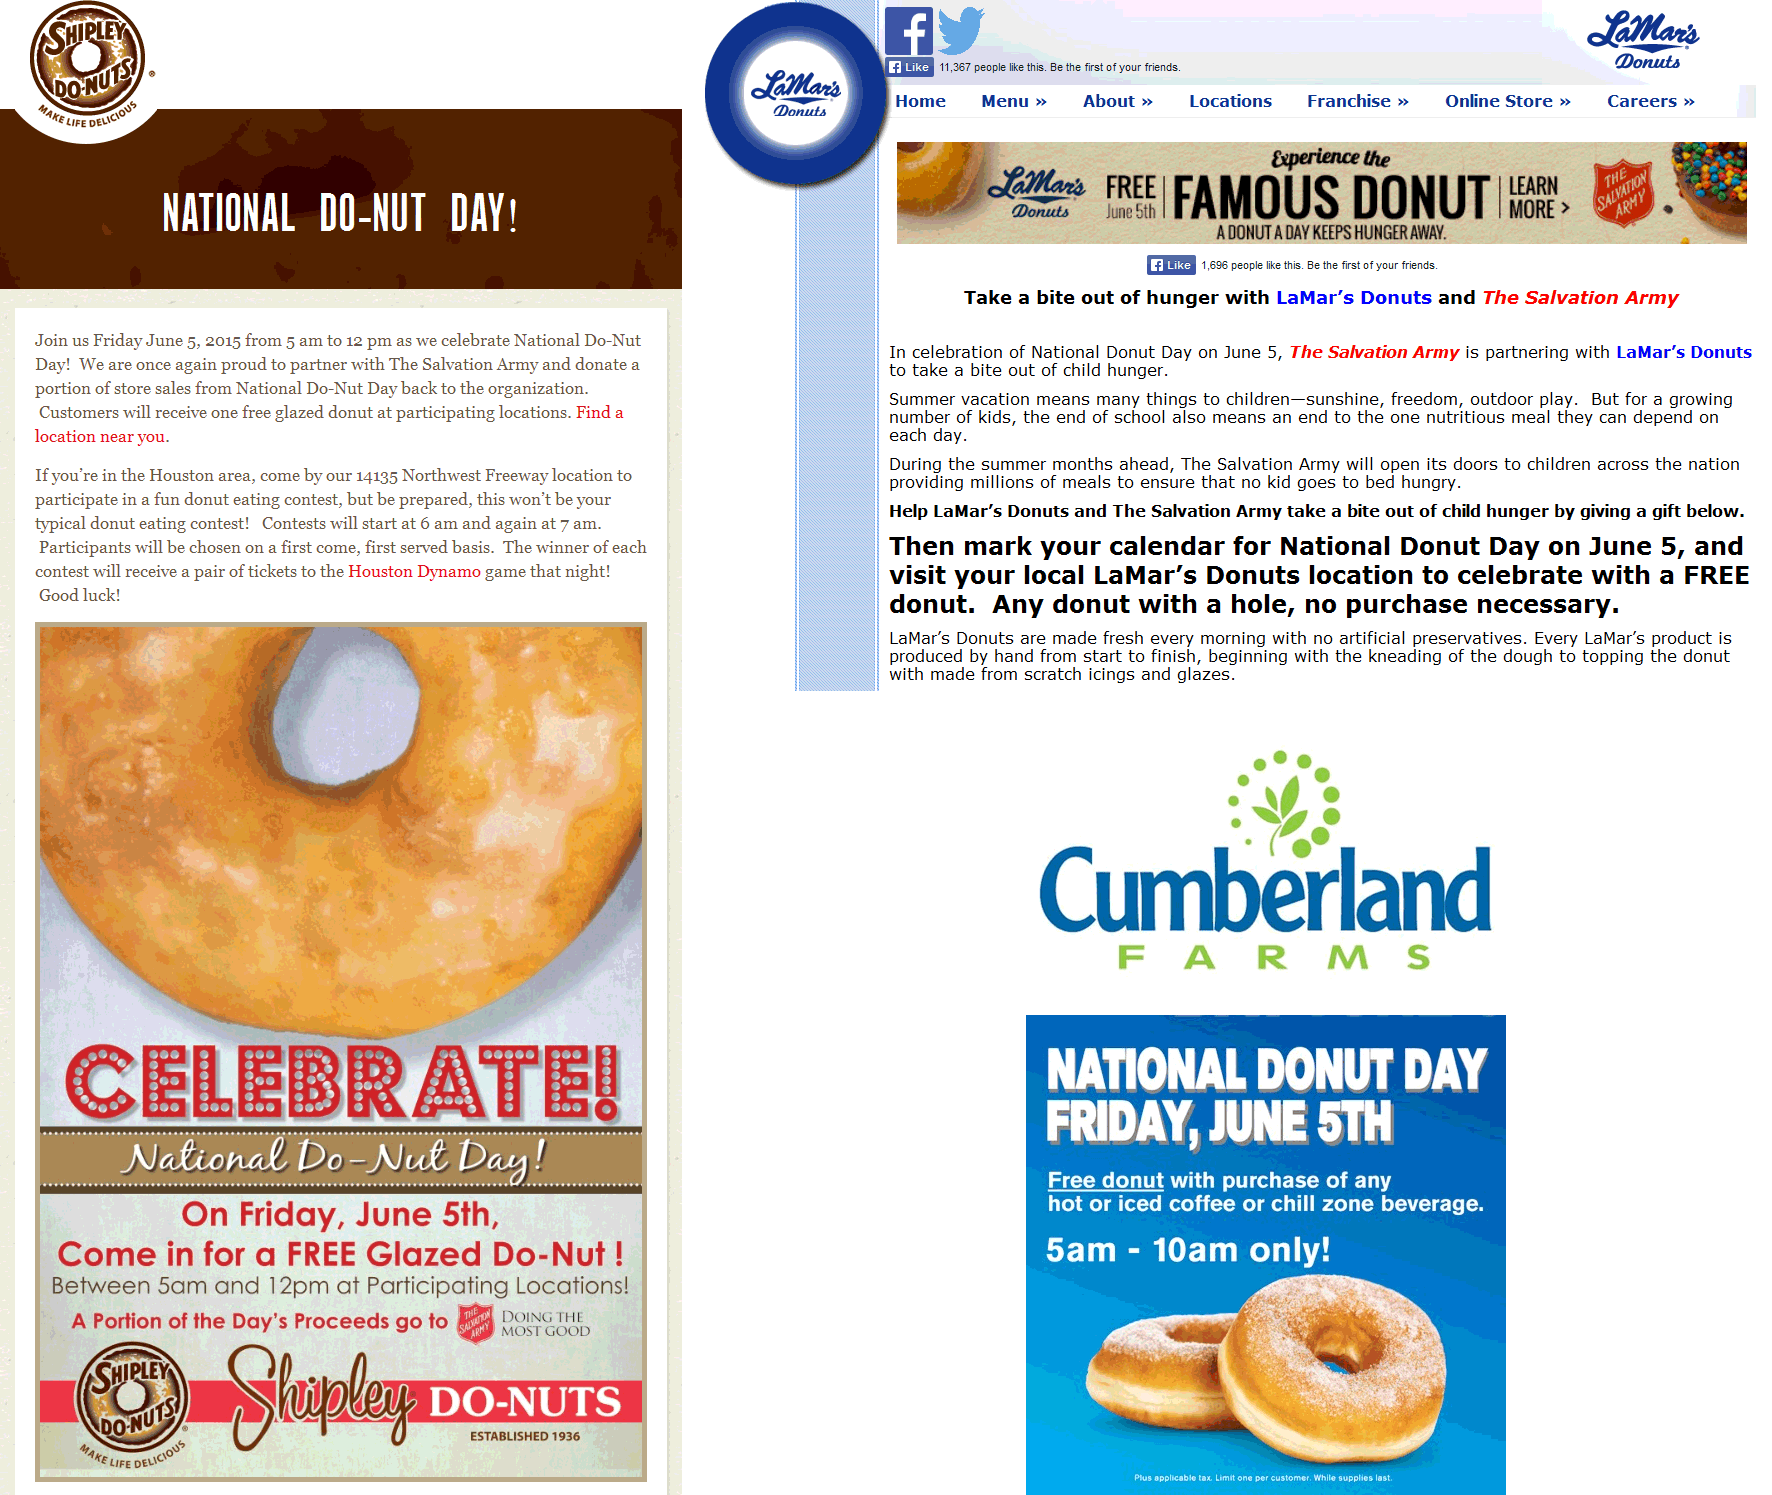 Shipley Do-Nuts Coupon April 2024 More free donuts today at Shipley Do-Nuts, LaMars Donuts & Cumberland Farms